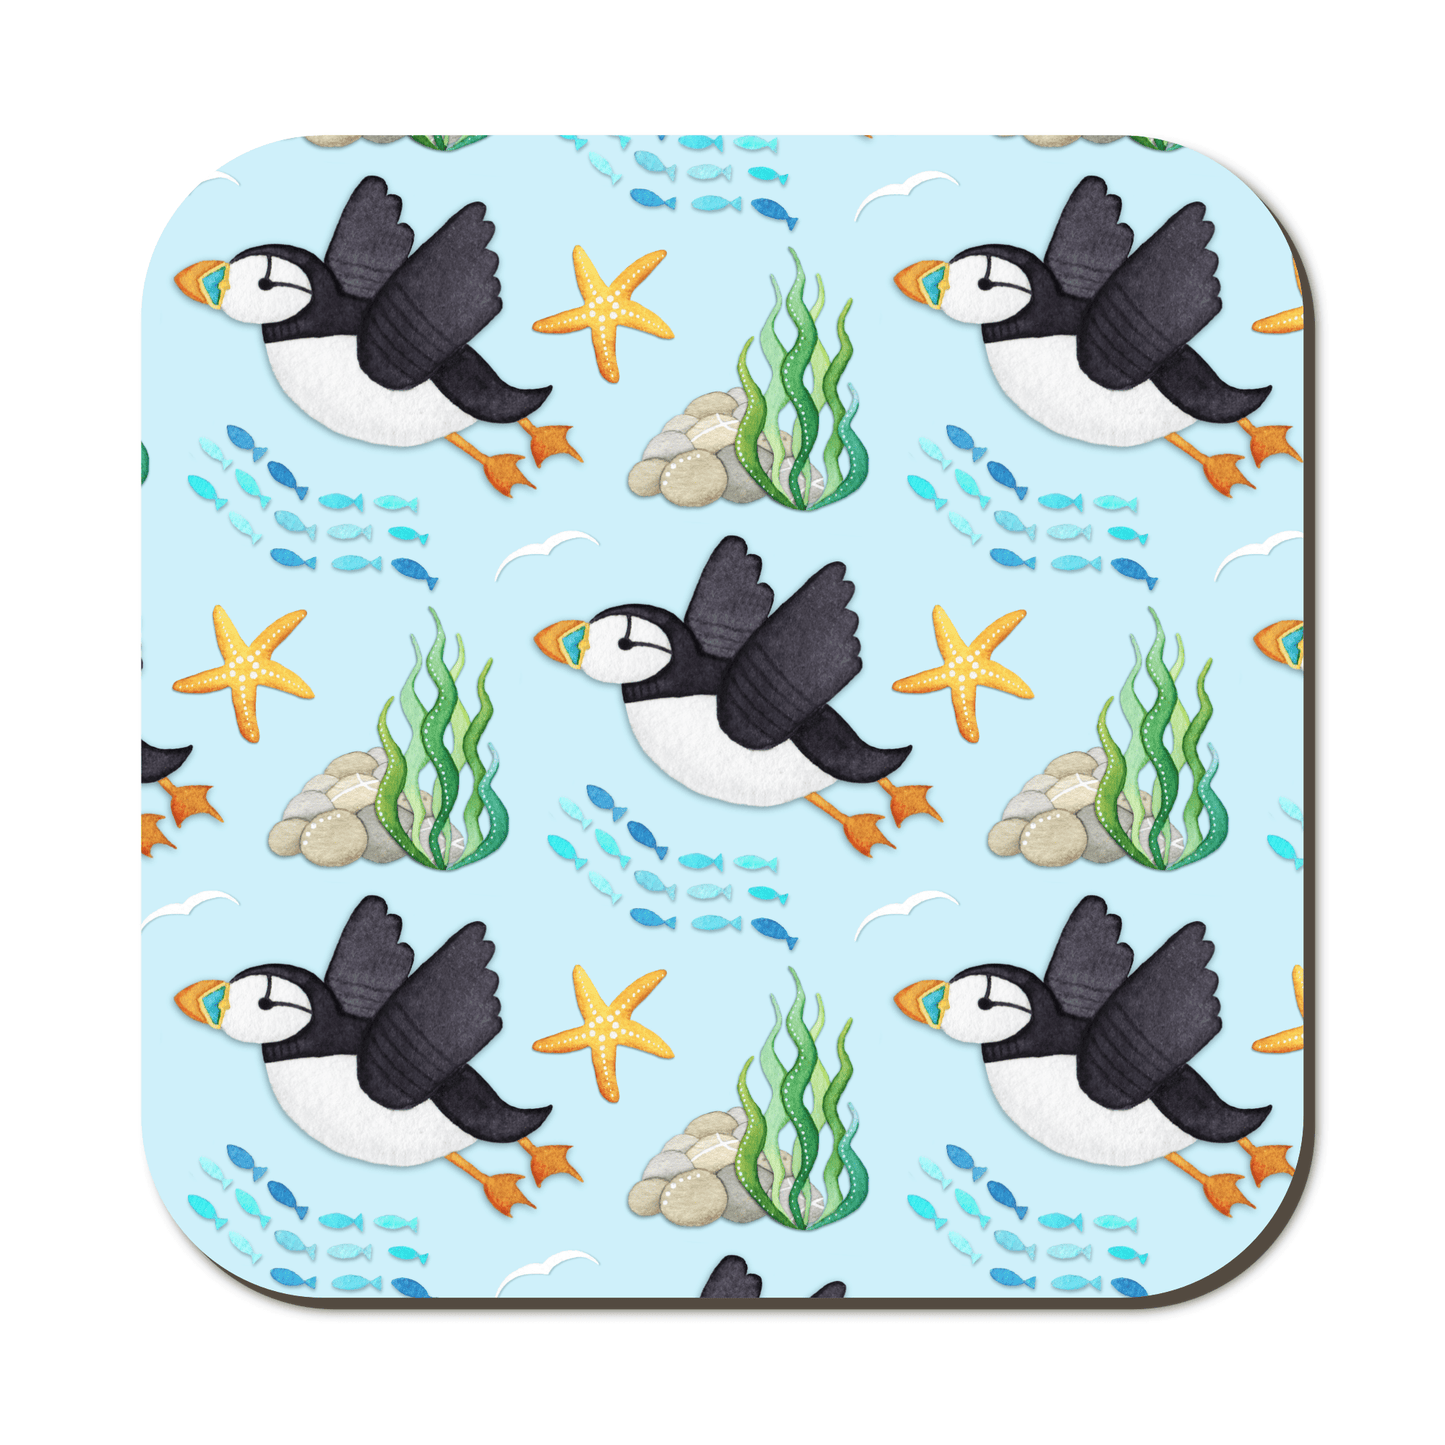 Coaster Set x 4 - Seagull & Puffin - Seaside Watercolour Patterns - East Neuk Beach Crafts